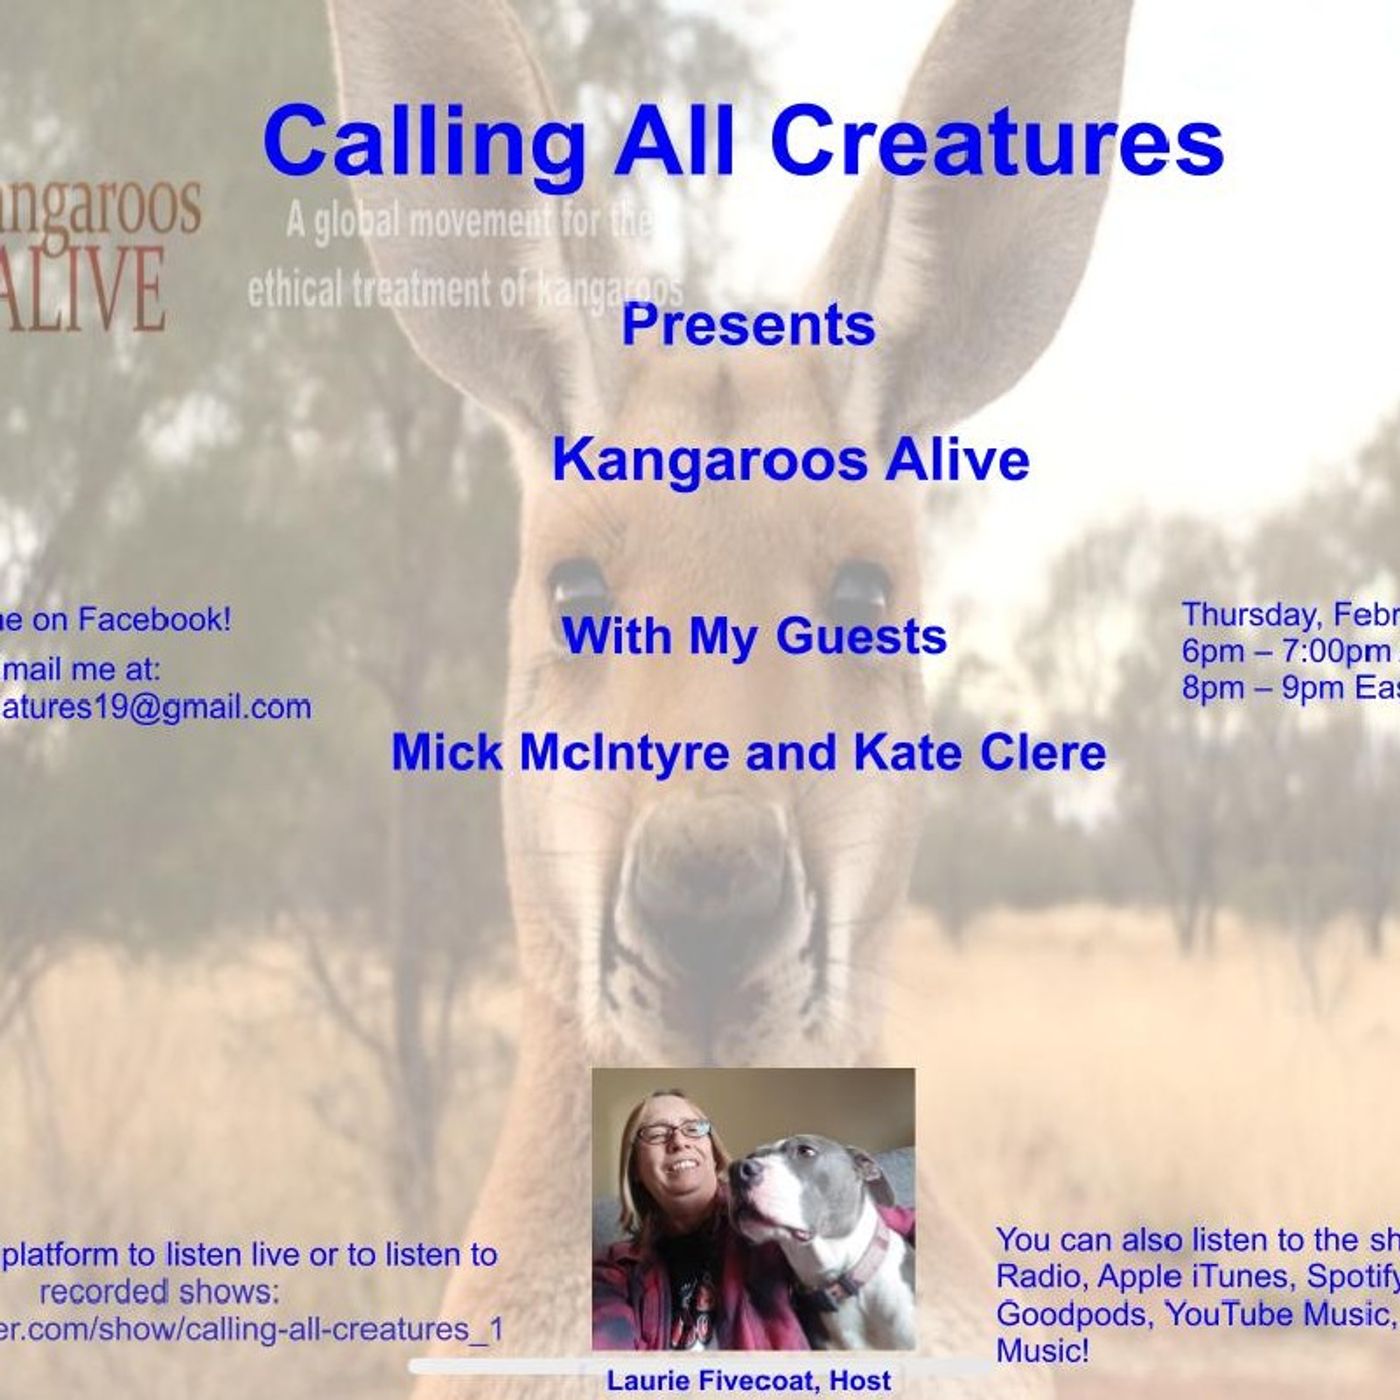 Calling All Creatures Presents Kangaroos Alive